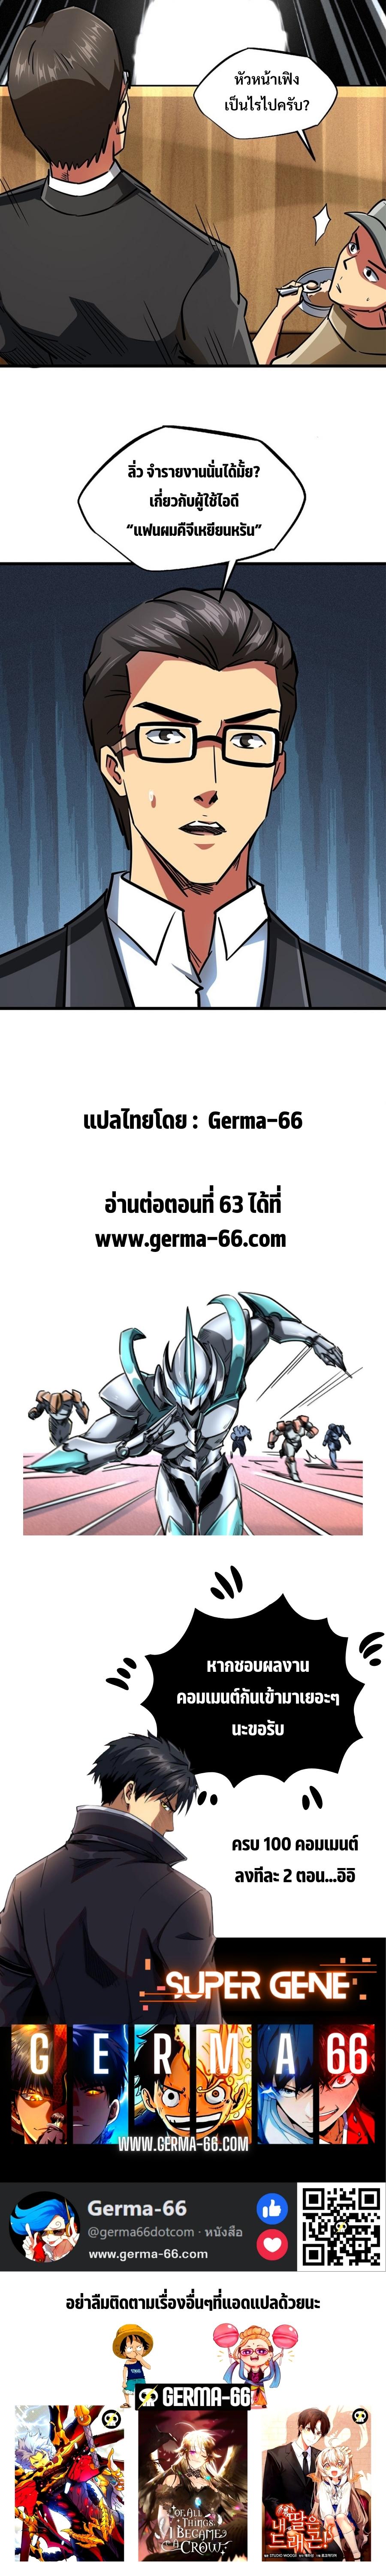 Super God Gene62 (11)